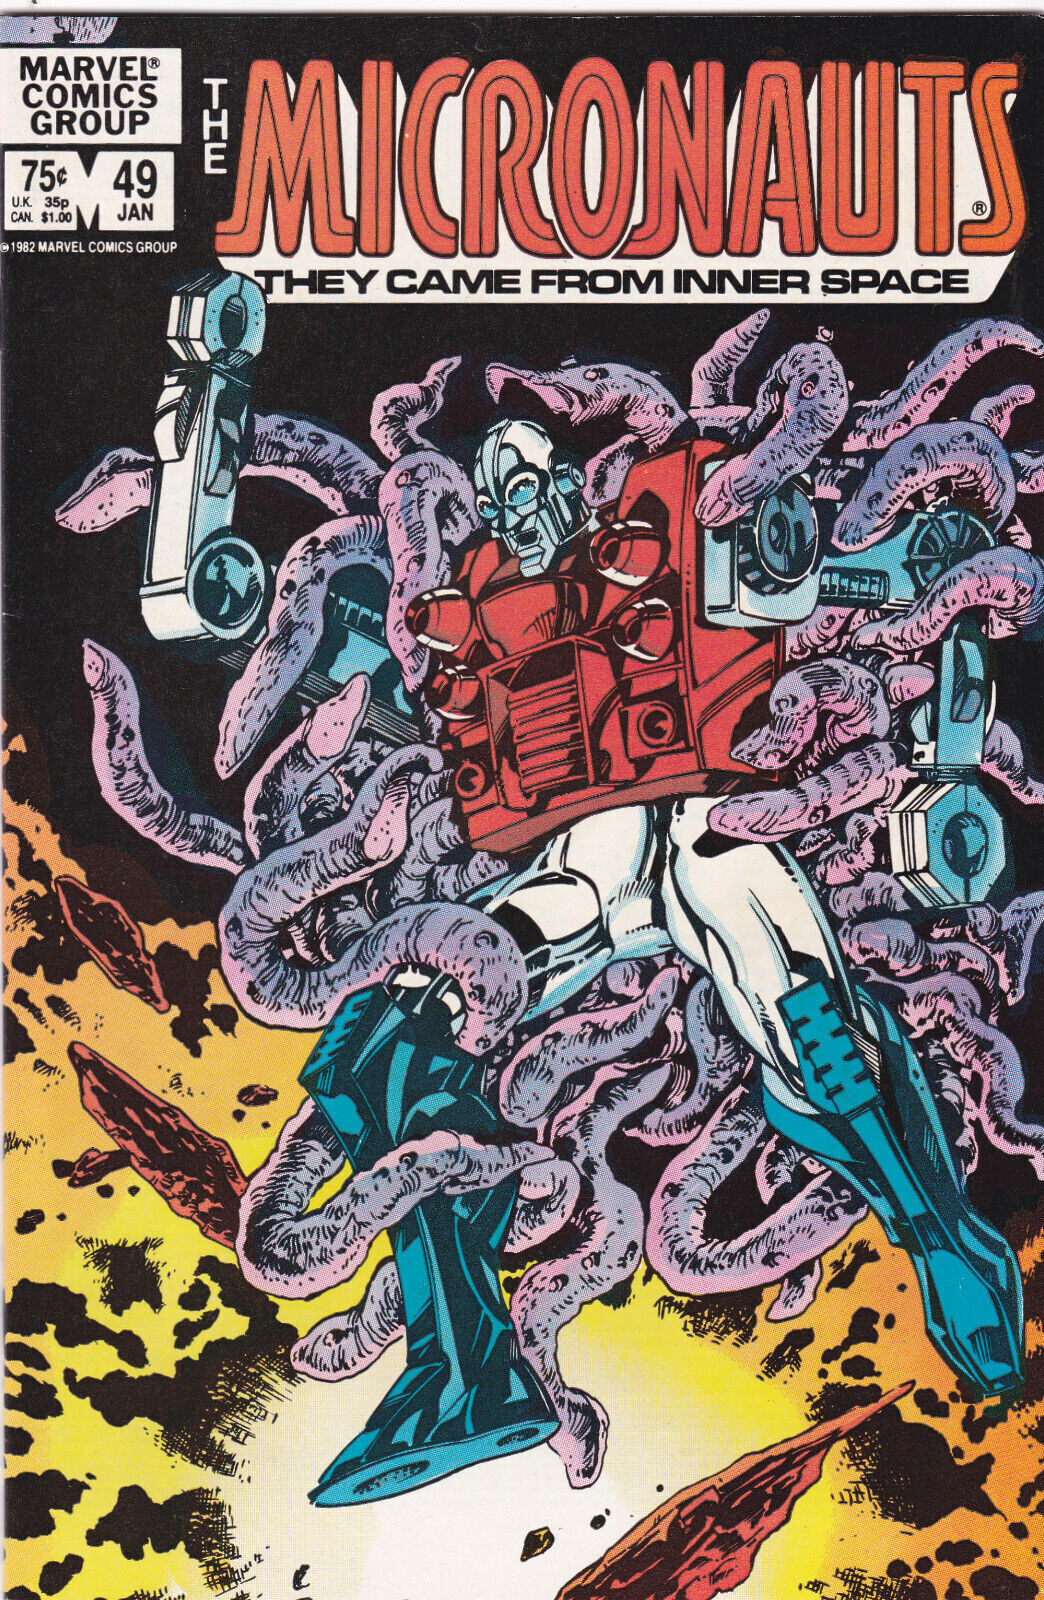 Micronauts #49, Vol. 1 (1979-1984) Marvel Comics